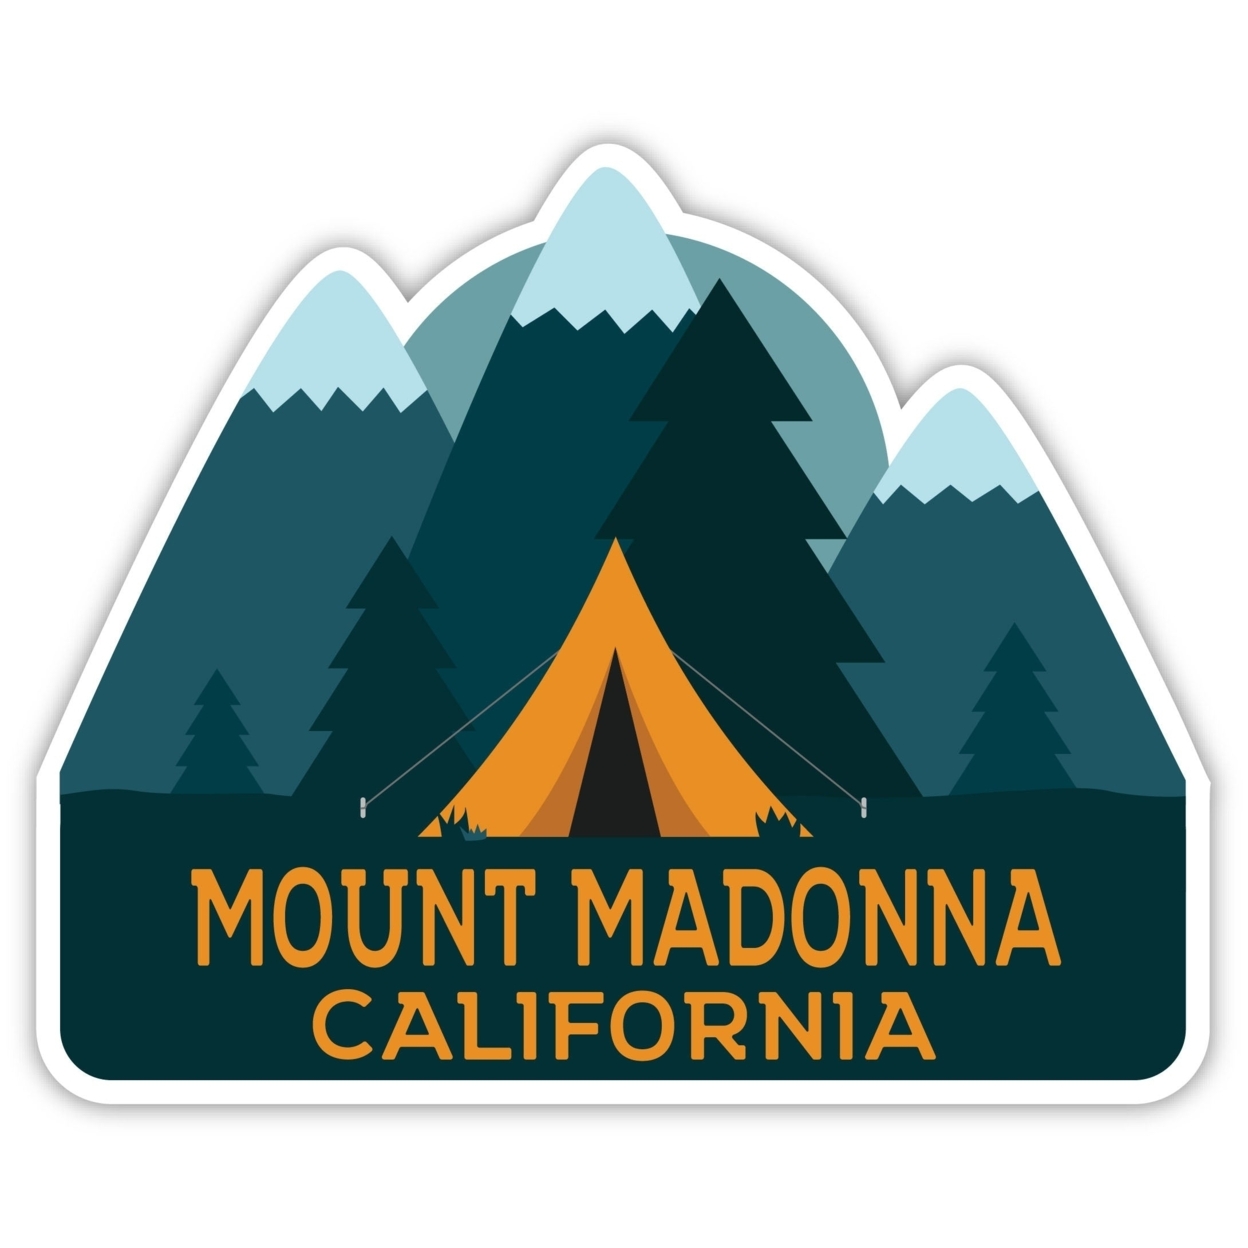 Mount Madonna California Souvenir Decorative Stickers (Choose Theme And Size) - Single Unit, 4-Inch, Tent